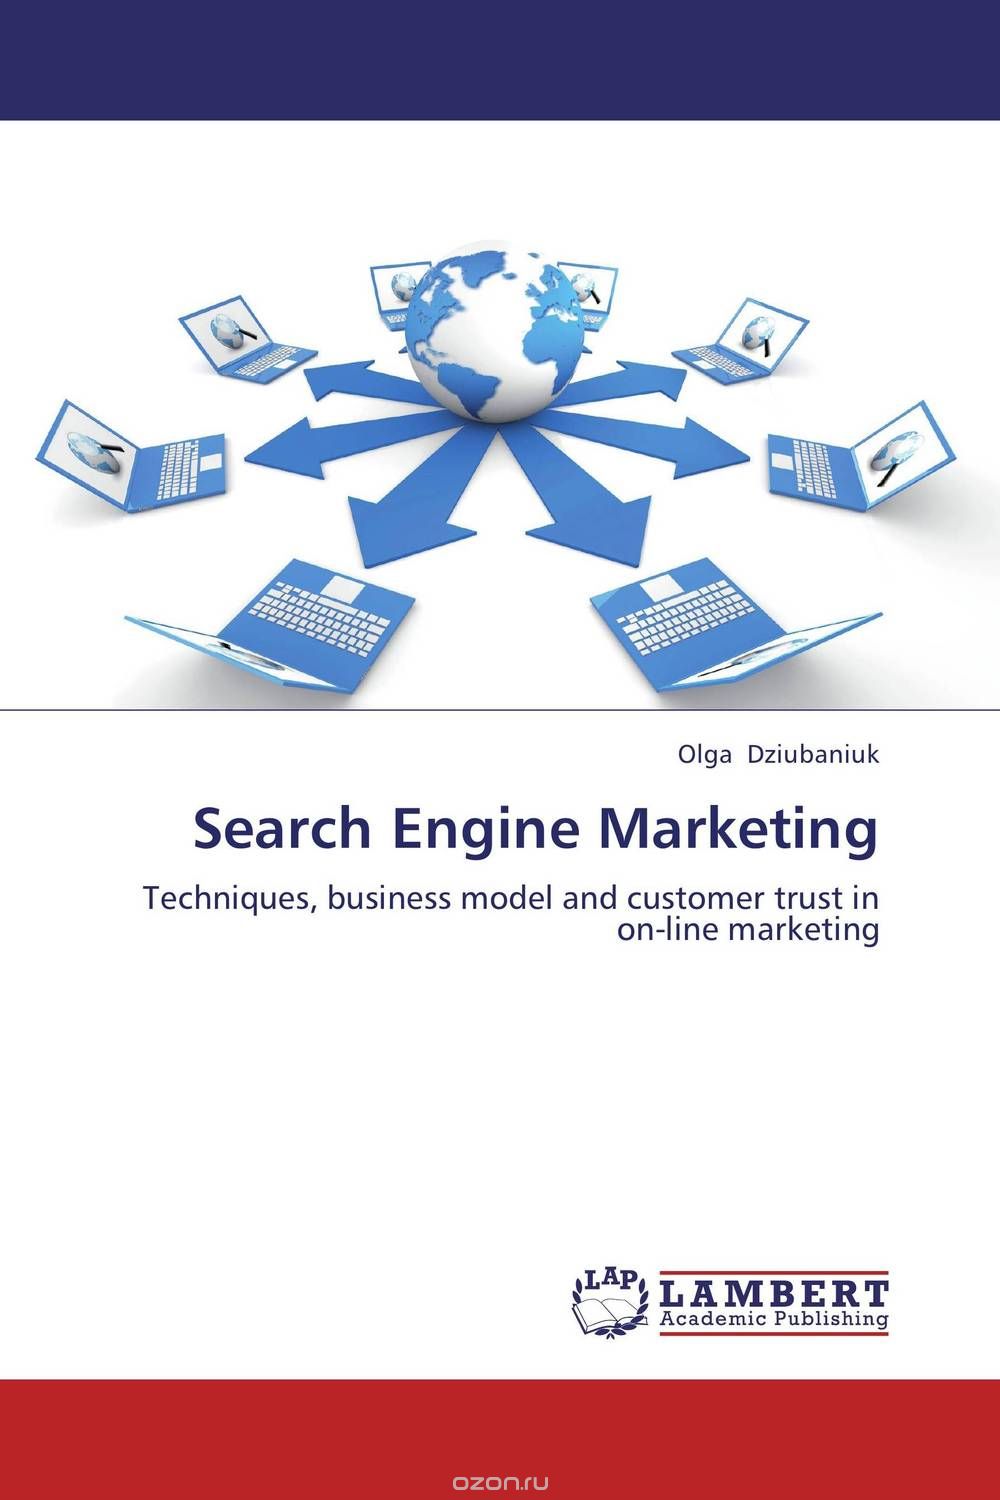 Скачать книгу "Search Engine Marketing"